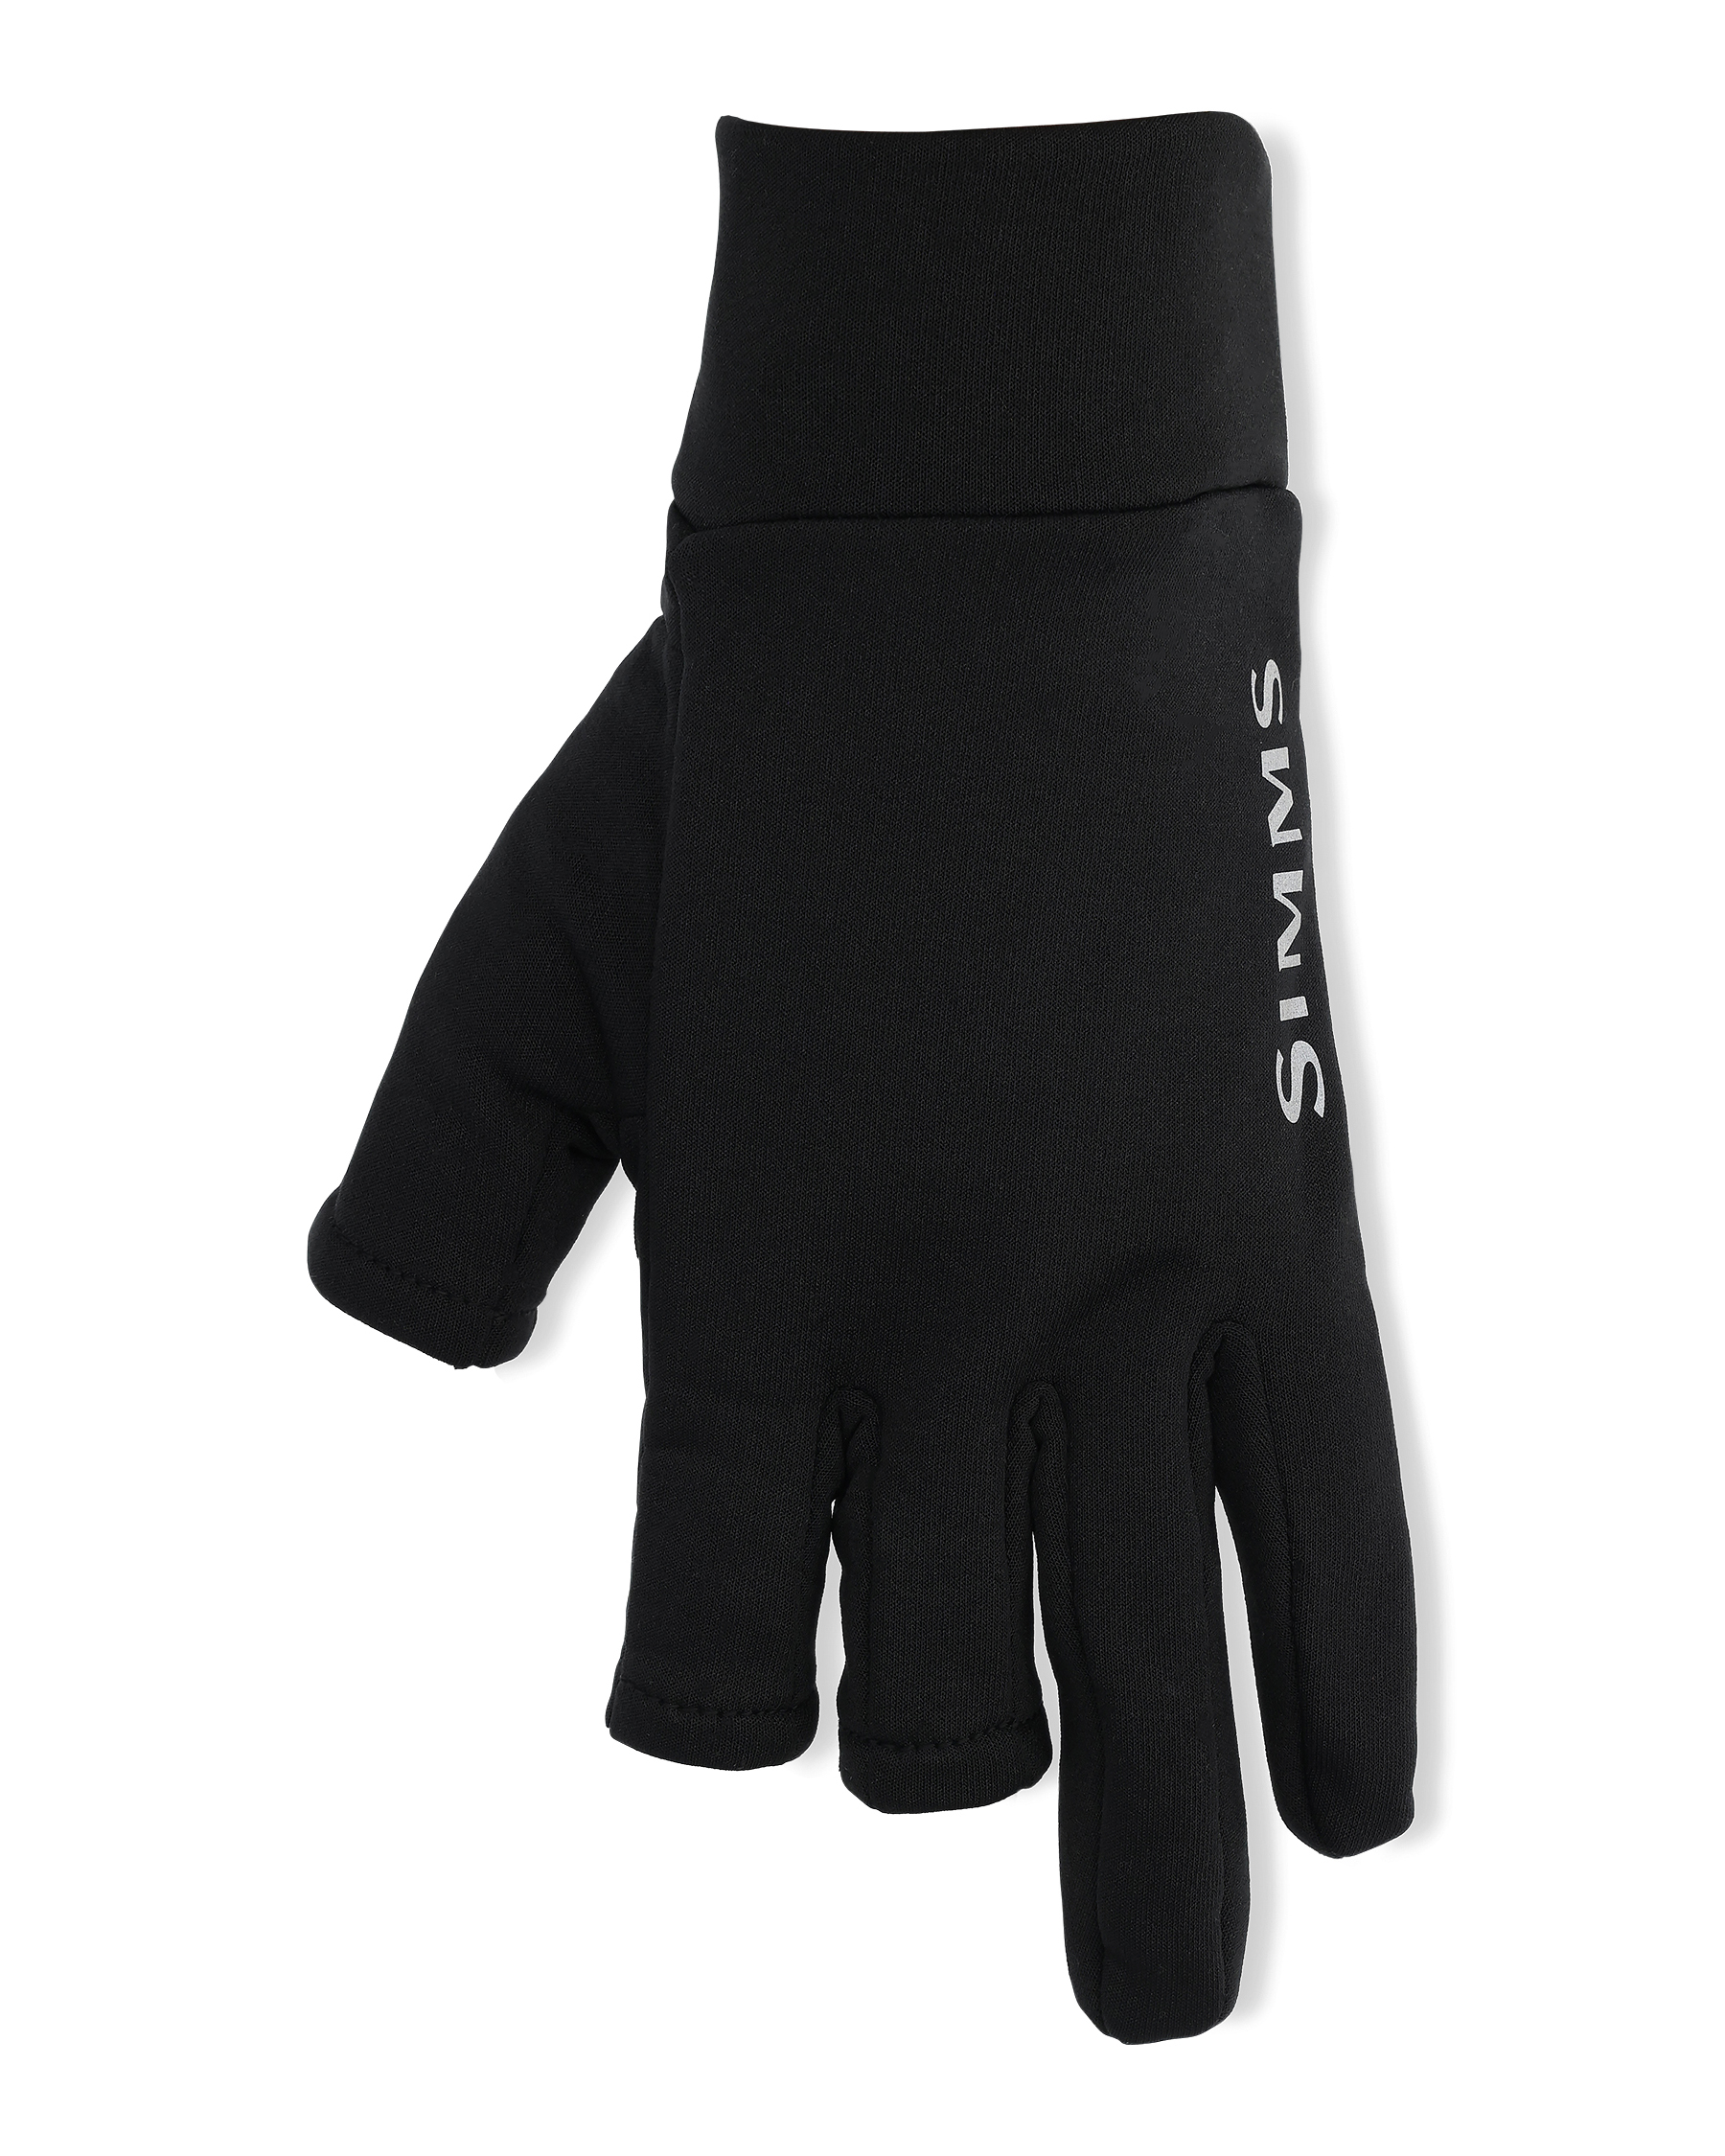 Pro Dry Gore-Tex Glove + Liner | Simms | マーヴェリック / Maverick